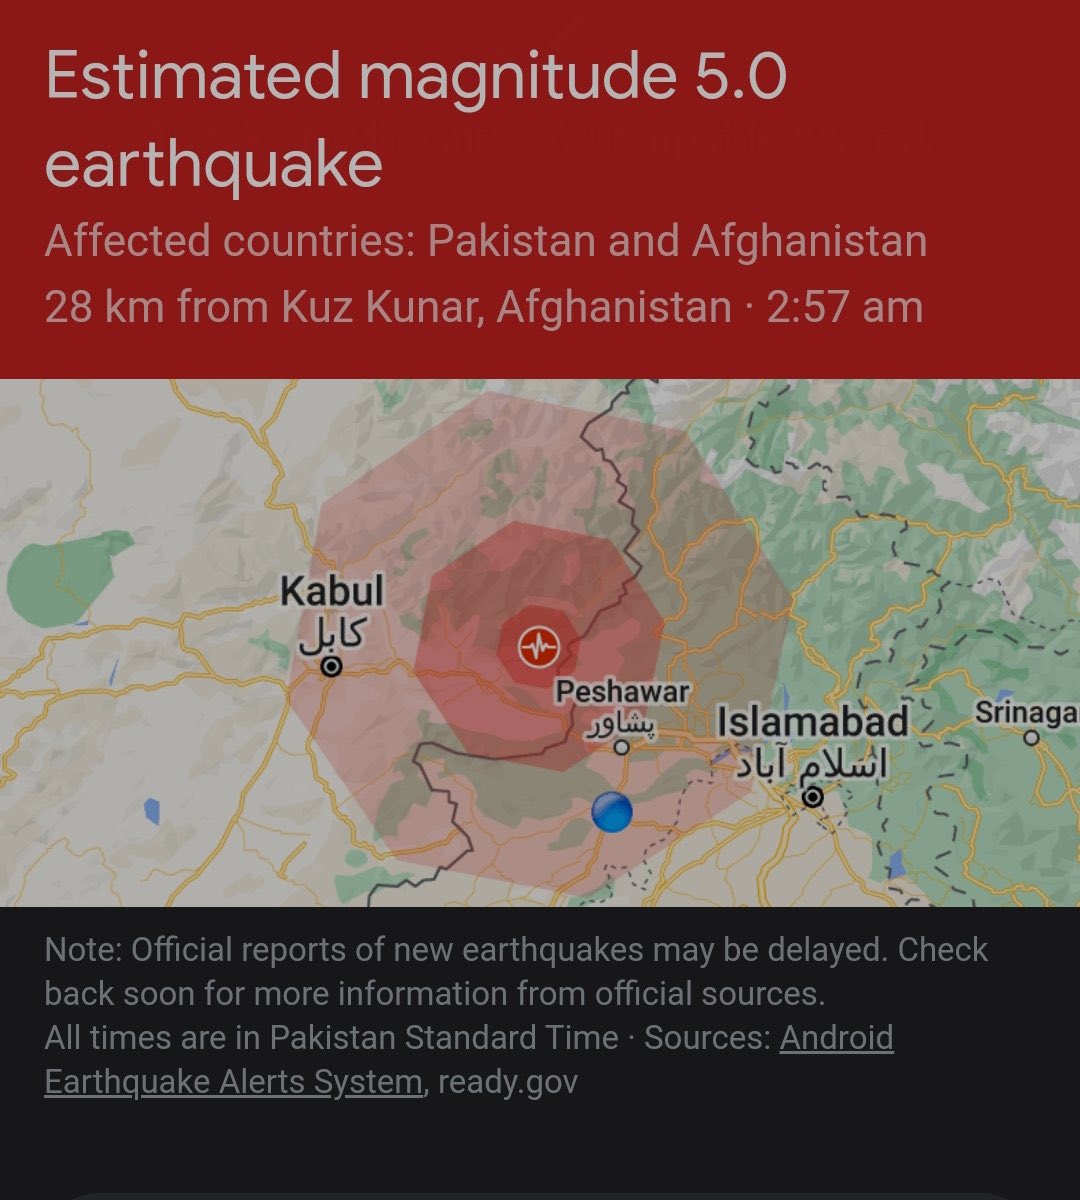 Earthquake shocks in and around Islamabad